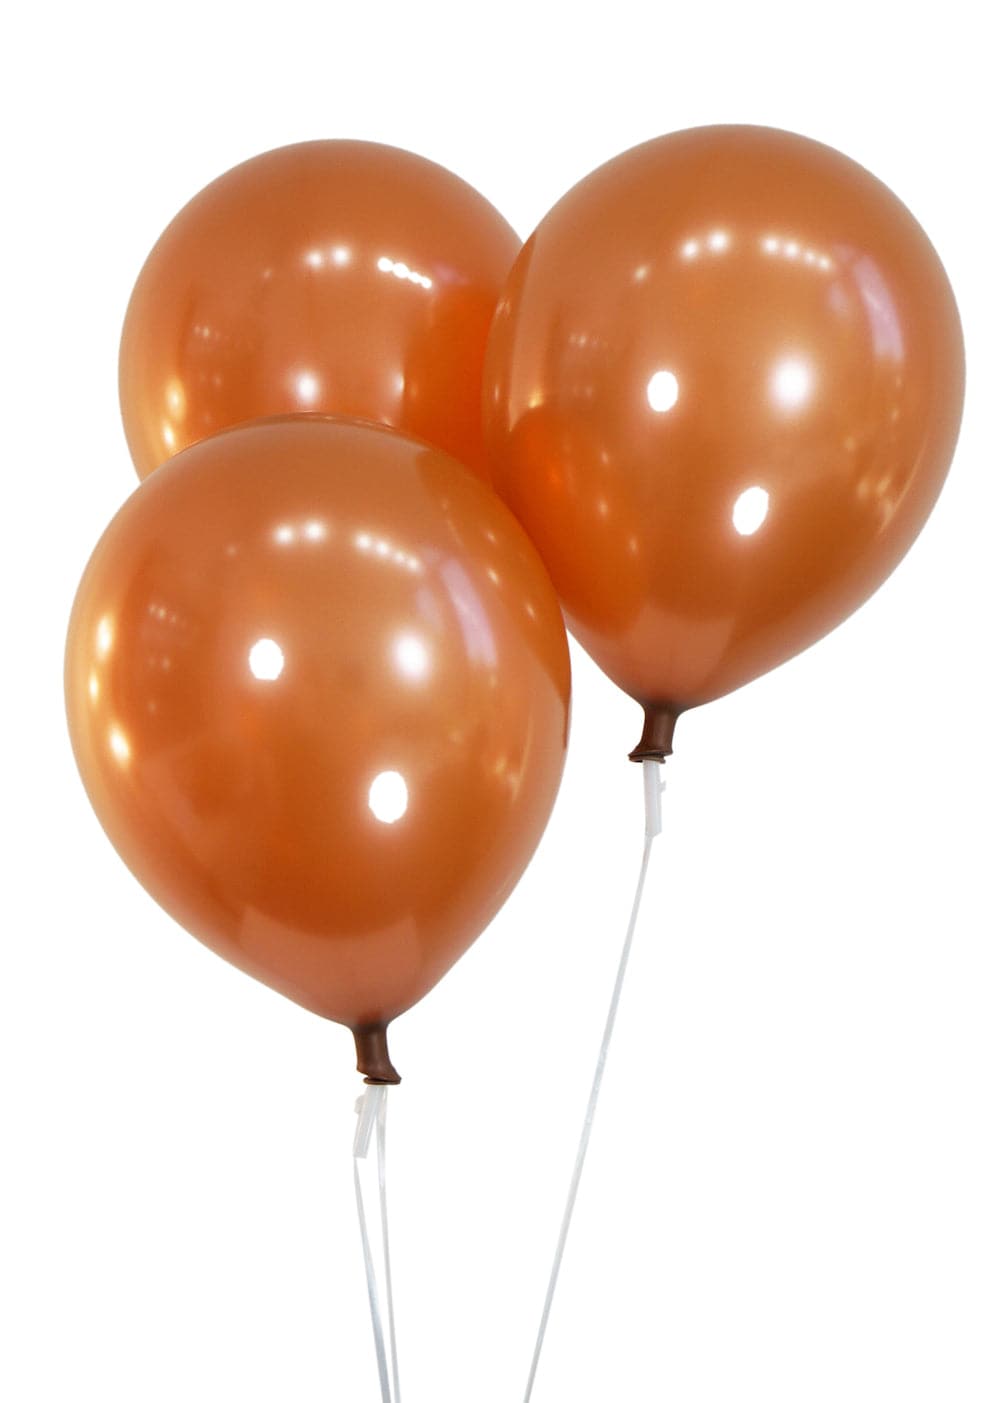 Bulk 144 Pc. Balloon Sticks with Cups